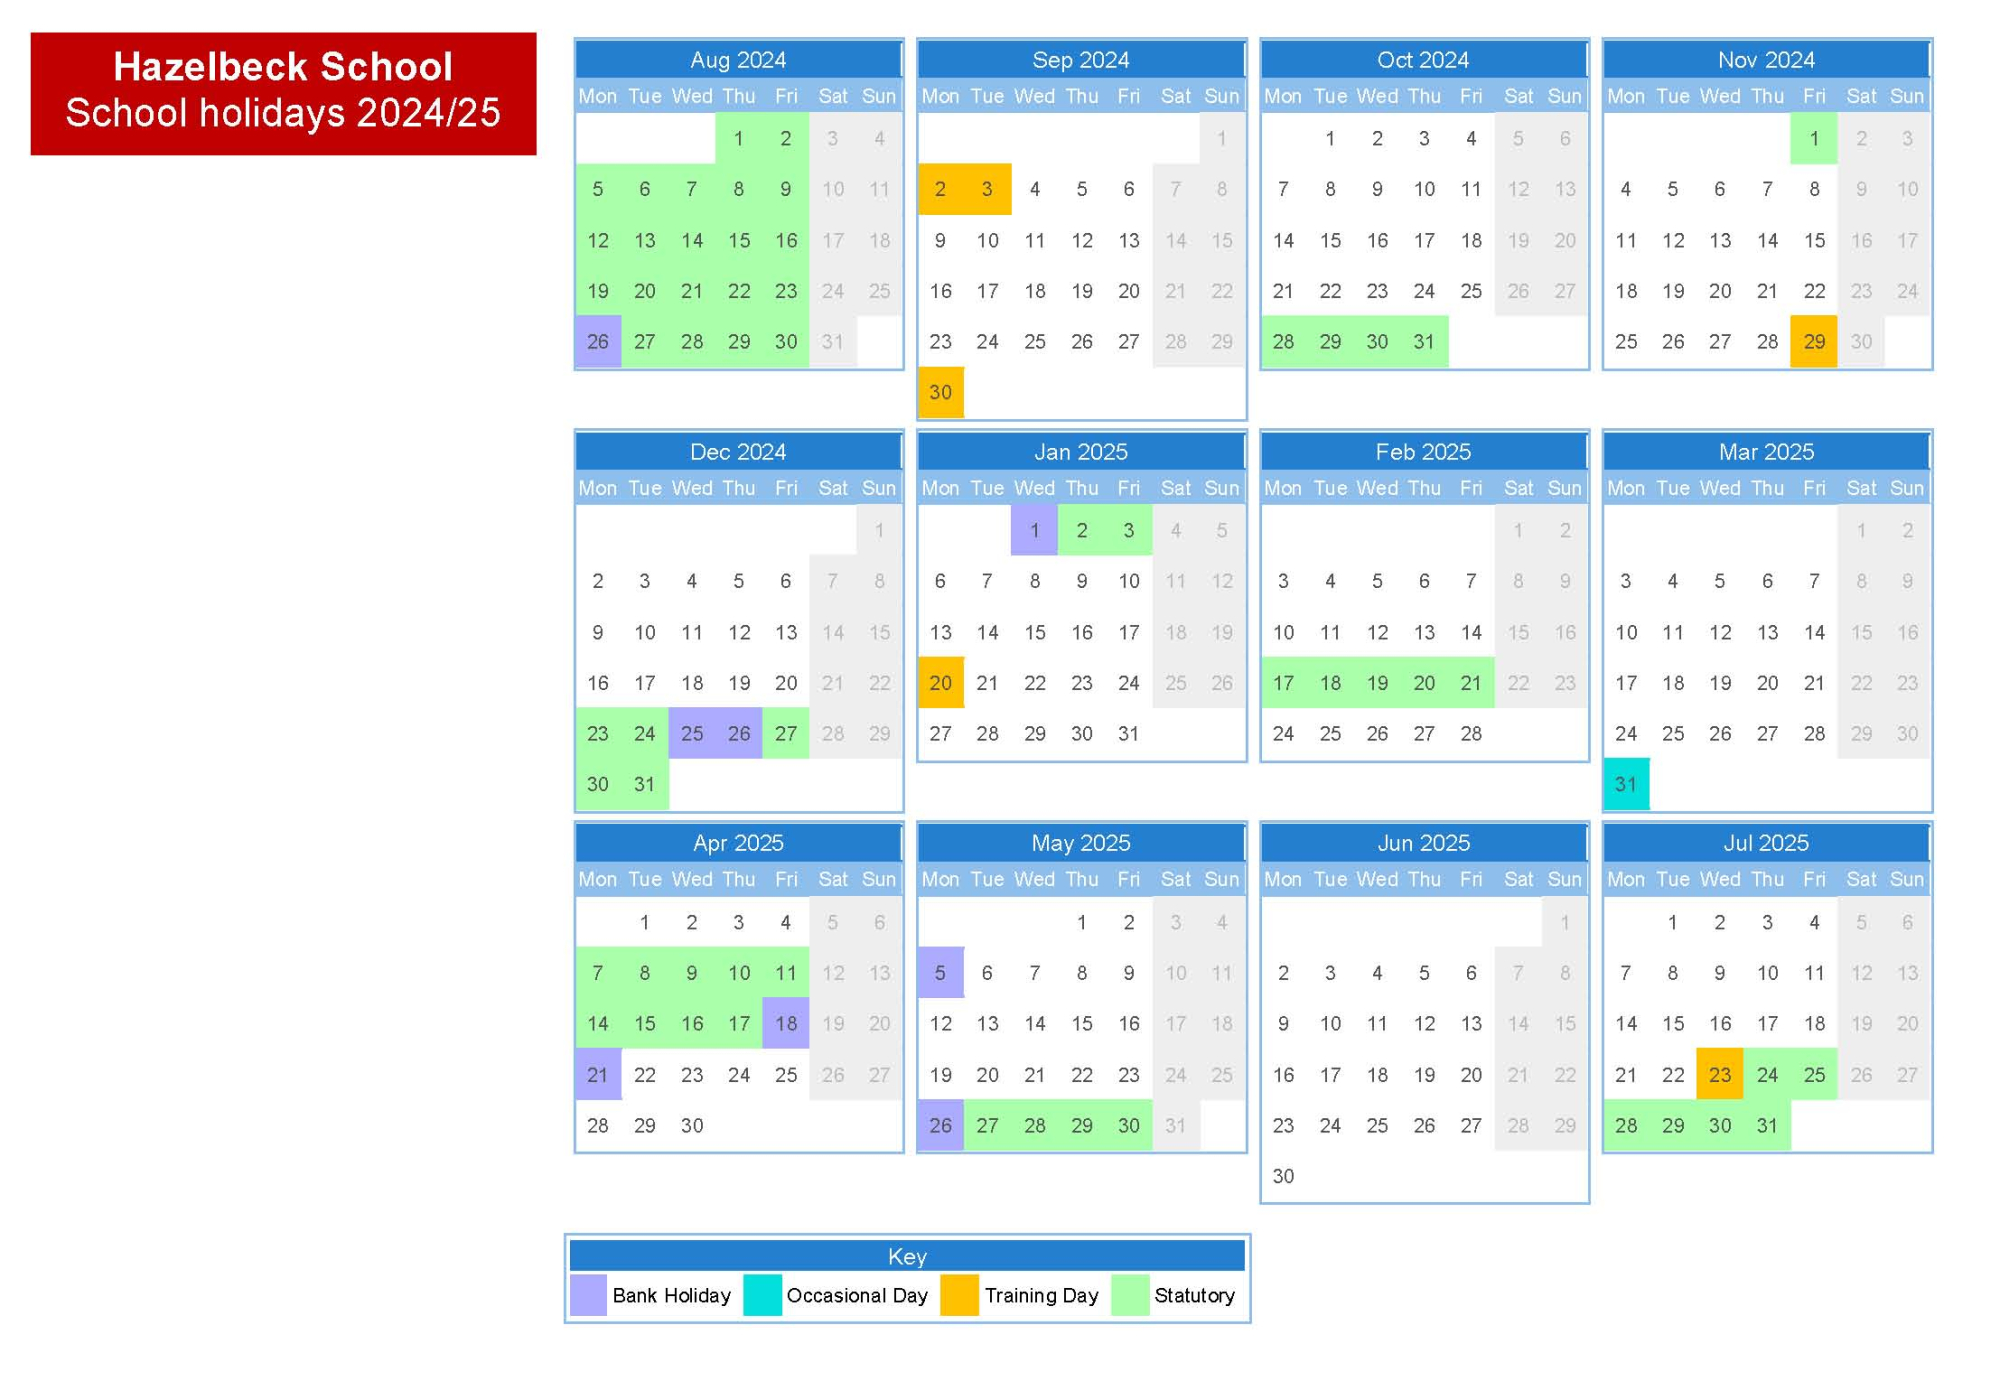 Hazelbeck School Calendar 2024 - 2025 re colour